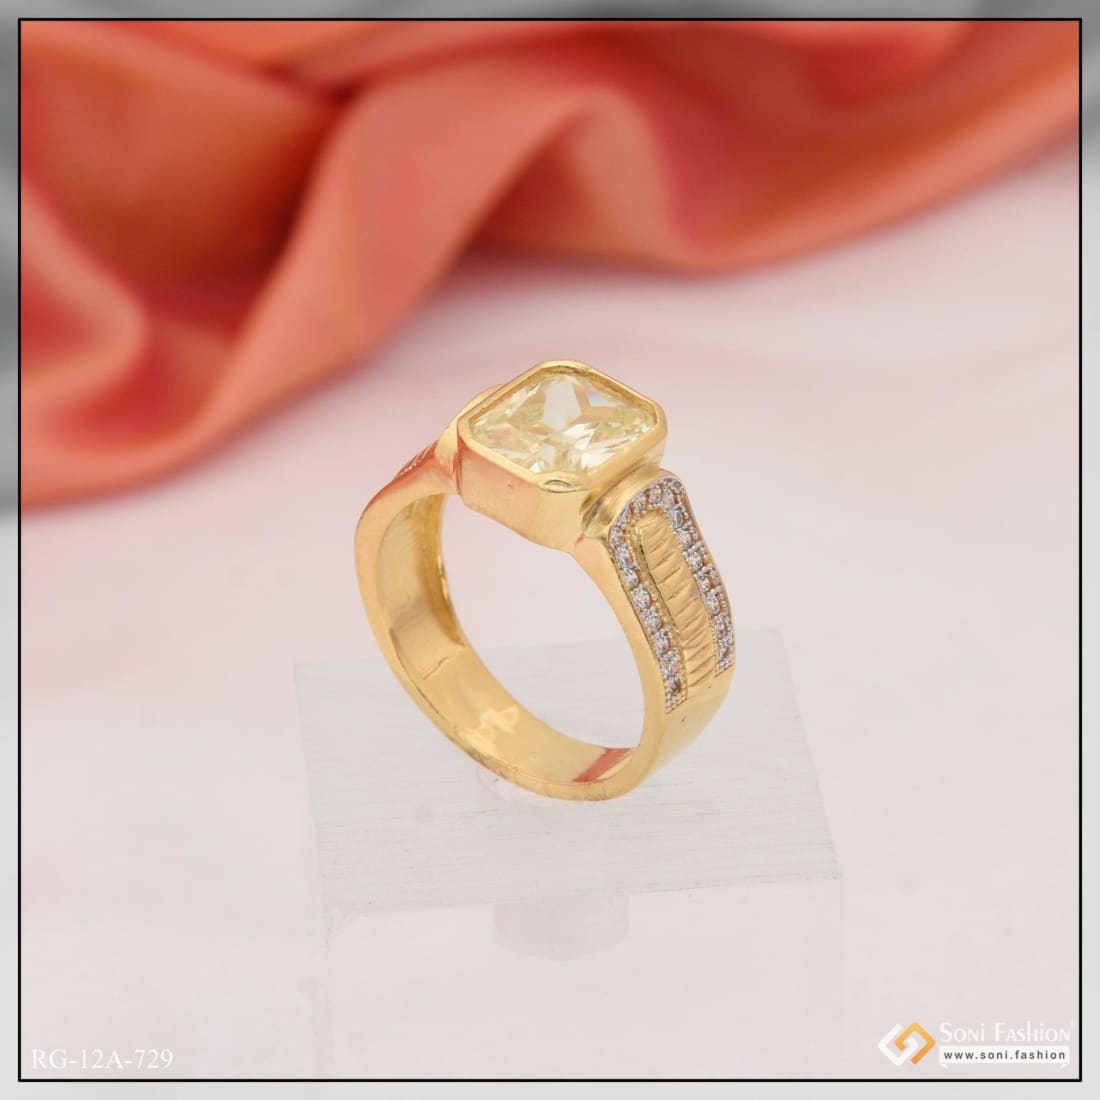 0.41 Ct Real Natural Diamond Anniversary Mens Ring 14K Solid Yellow Gold  Size 10 | eBay